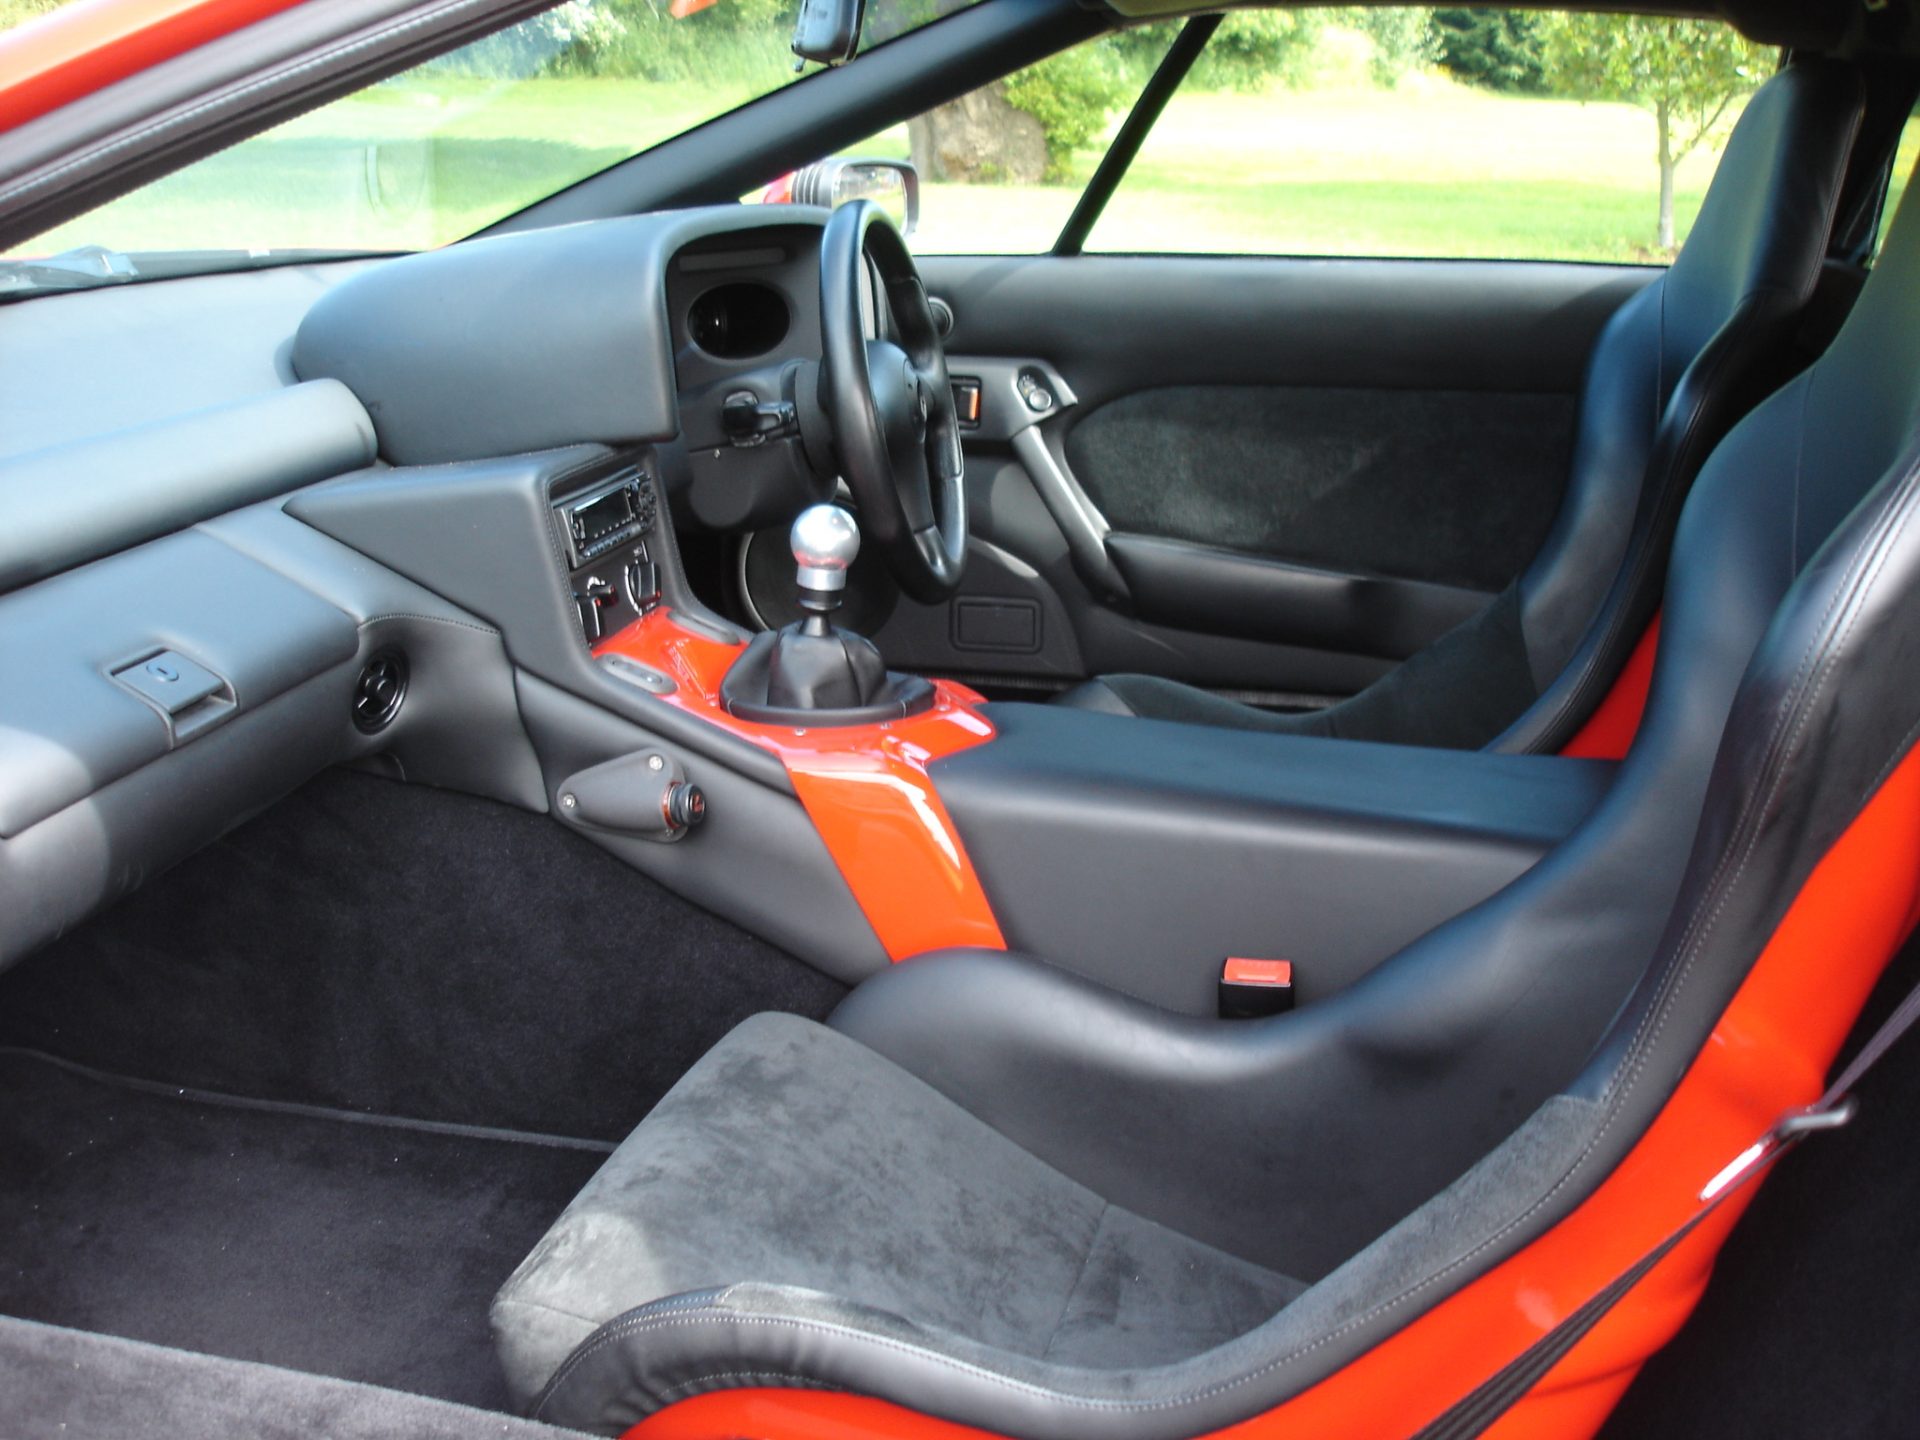 1997R-Lotus-Esprit-GT3-interior-front